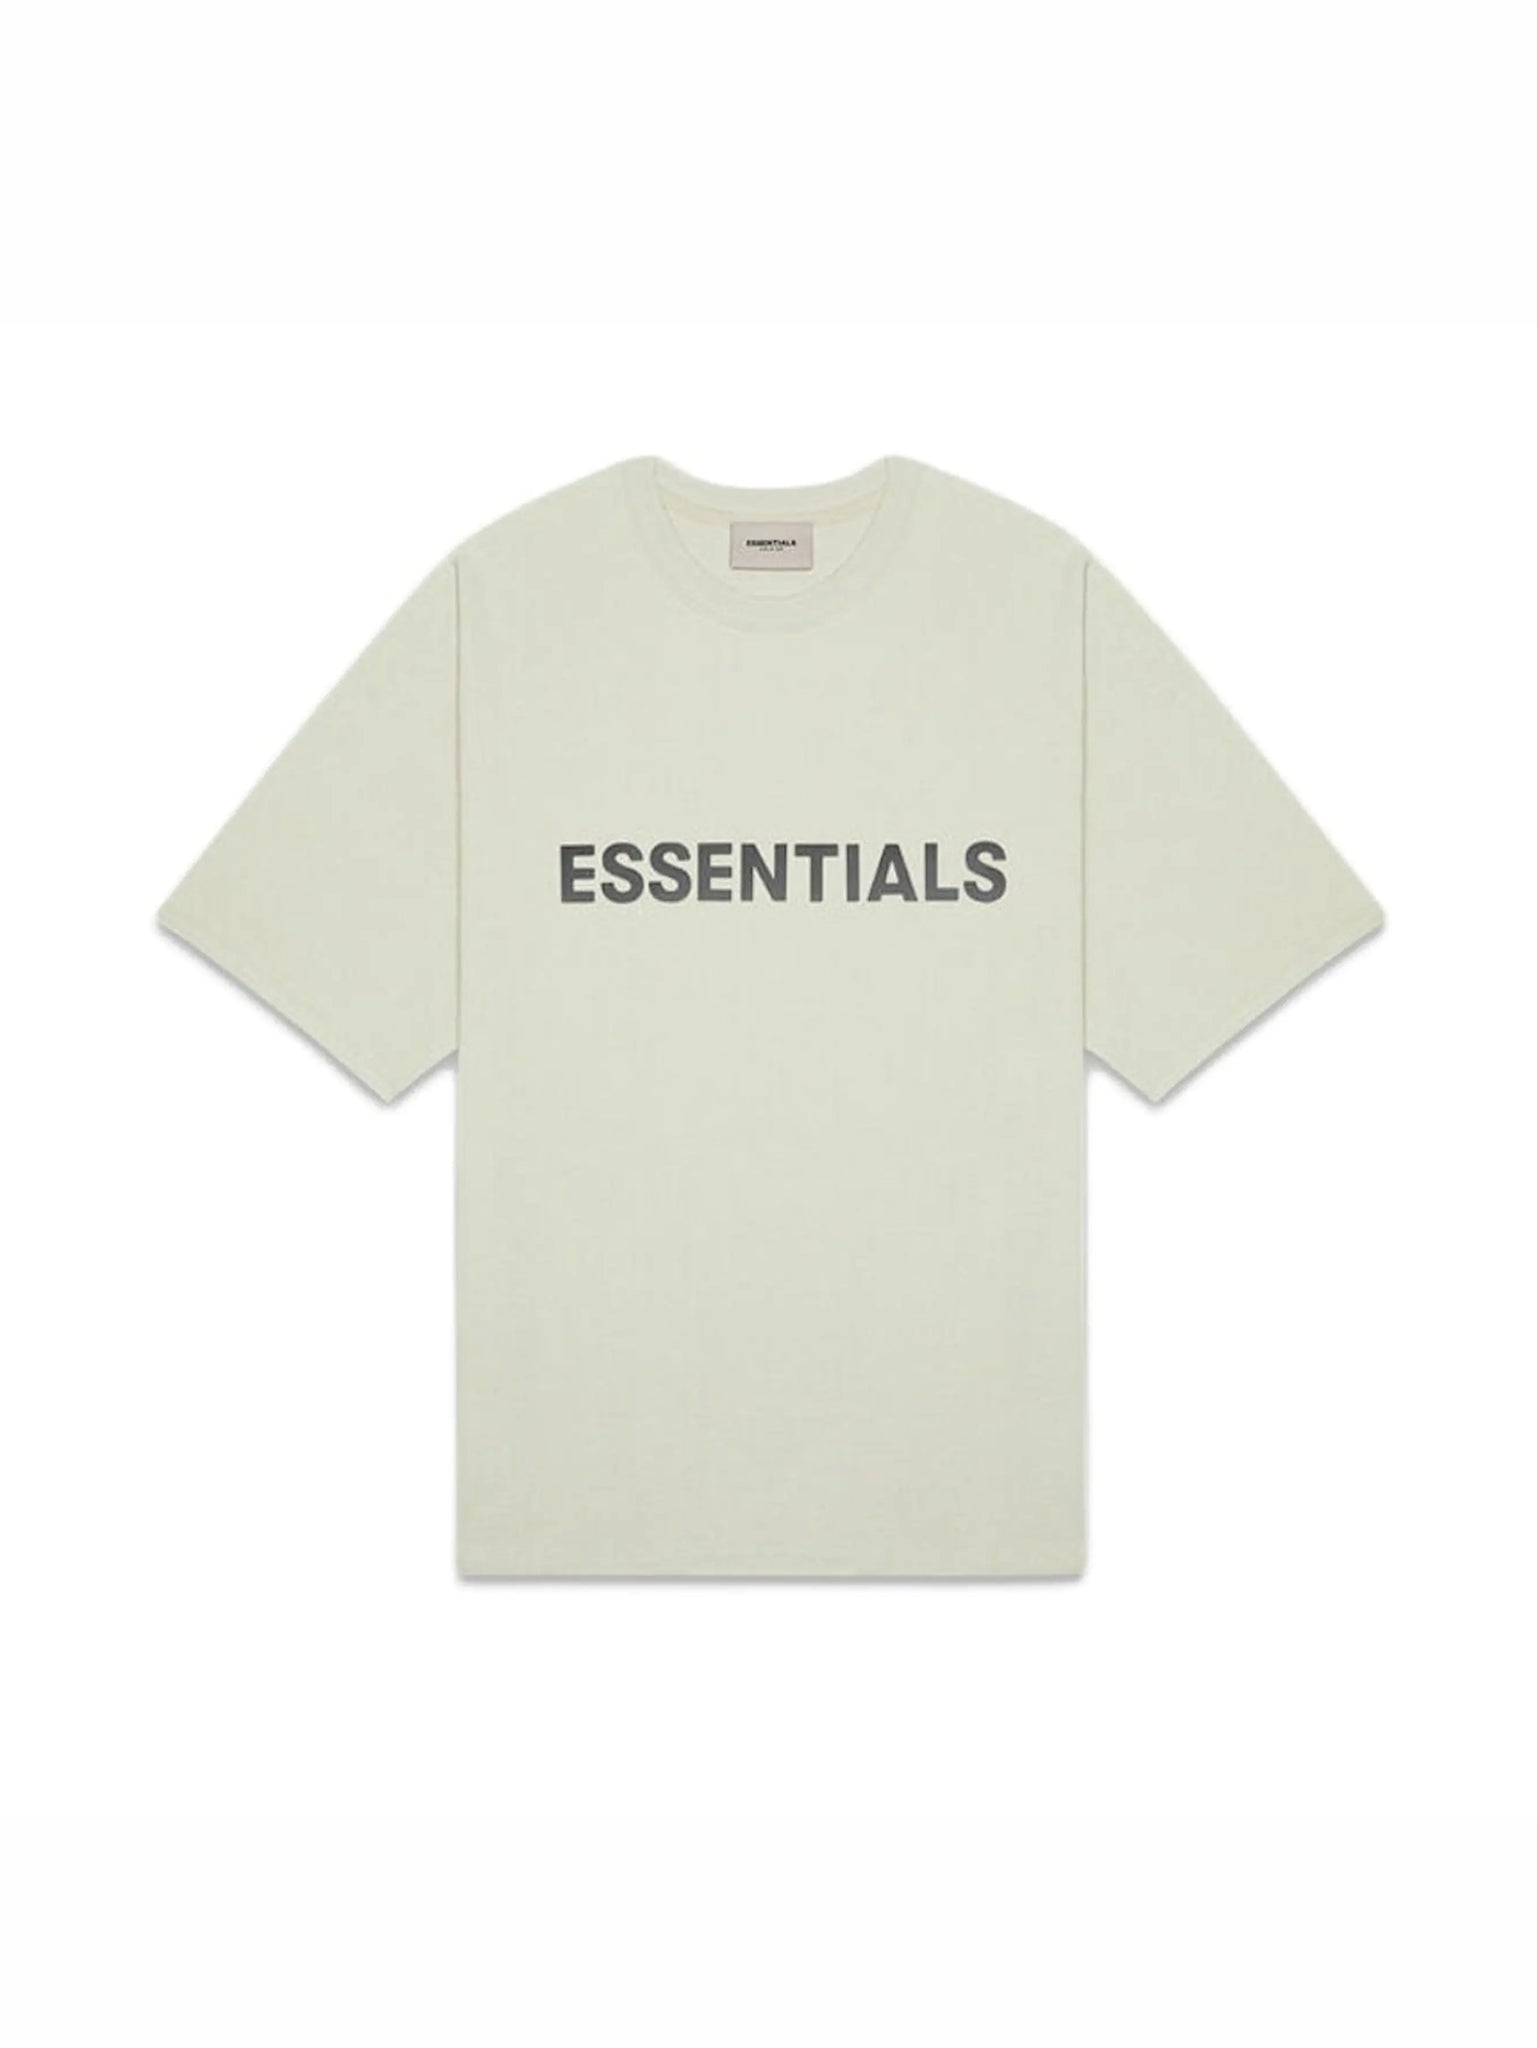 Fear of God Essentials Boxy T-Shirt Applique Logo Alfalfa Sage in Melbourne, Australia - Prior